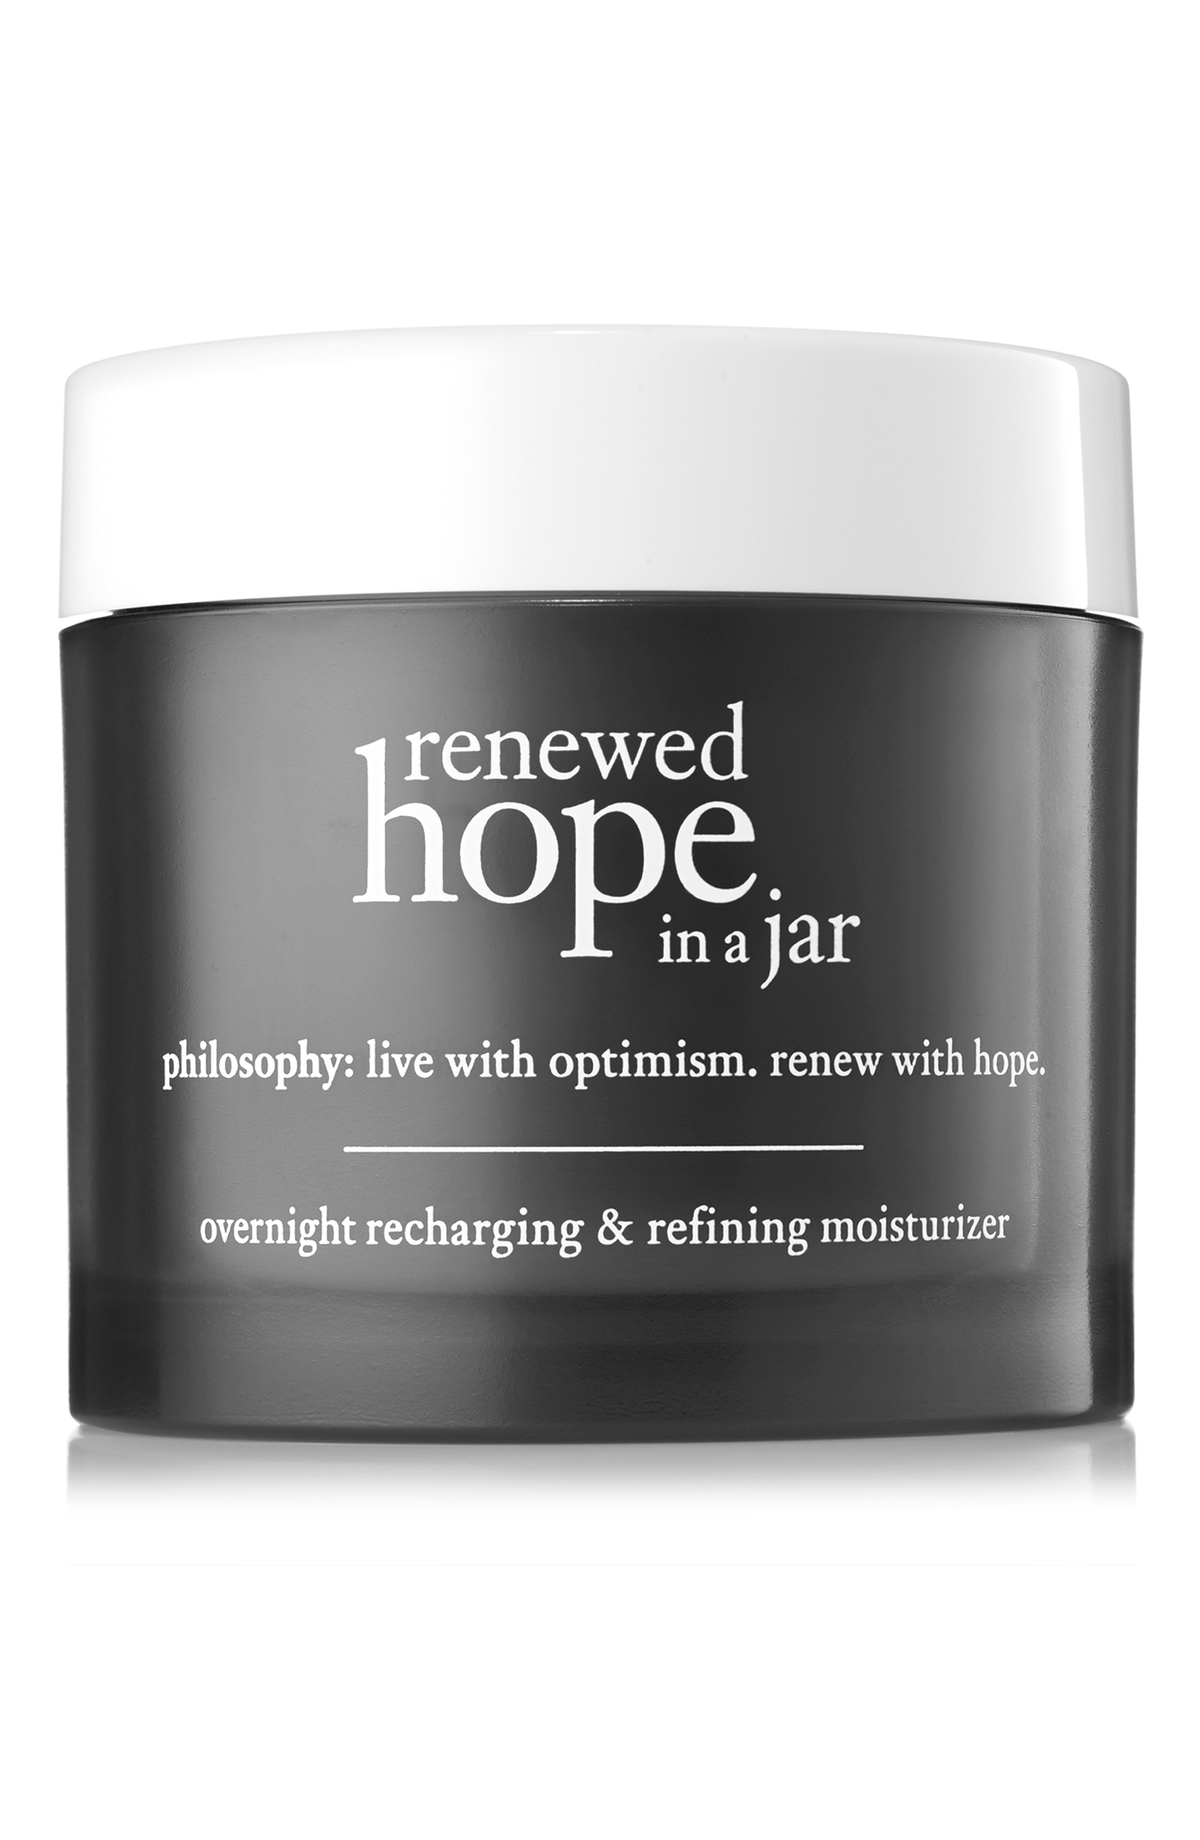 philosophy renewed hope in a jar overnight recharging & refining moisturizer - eCosmeticWorld